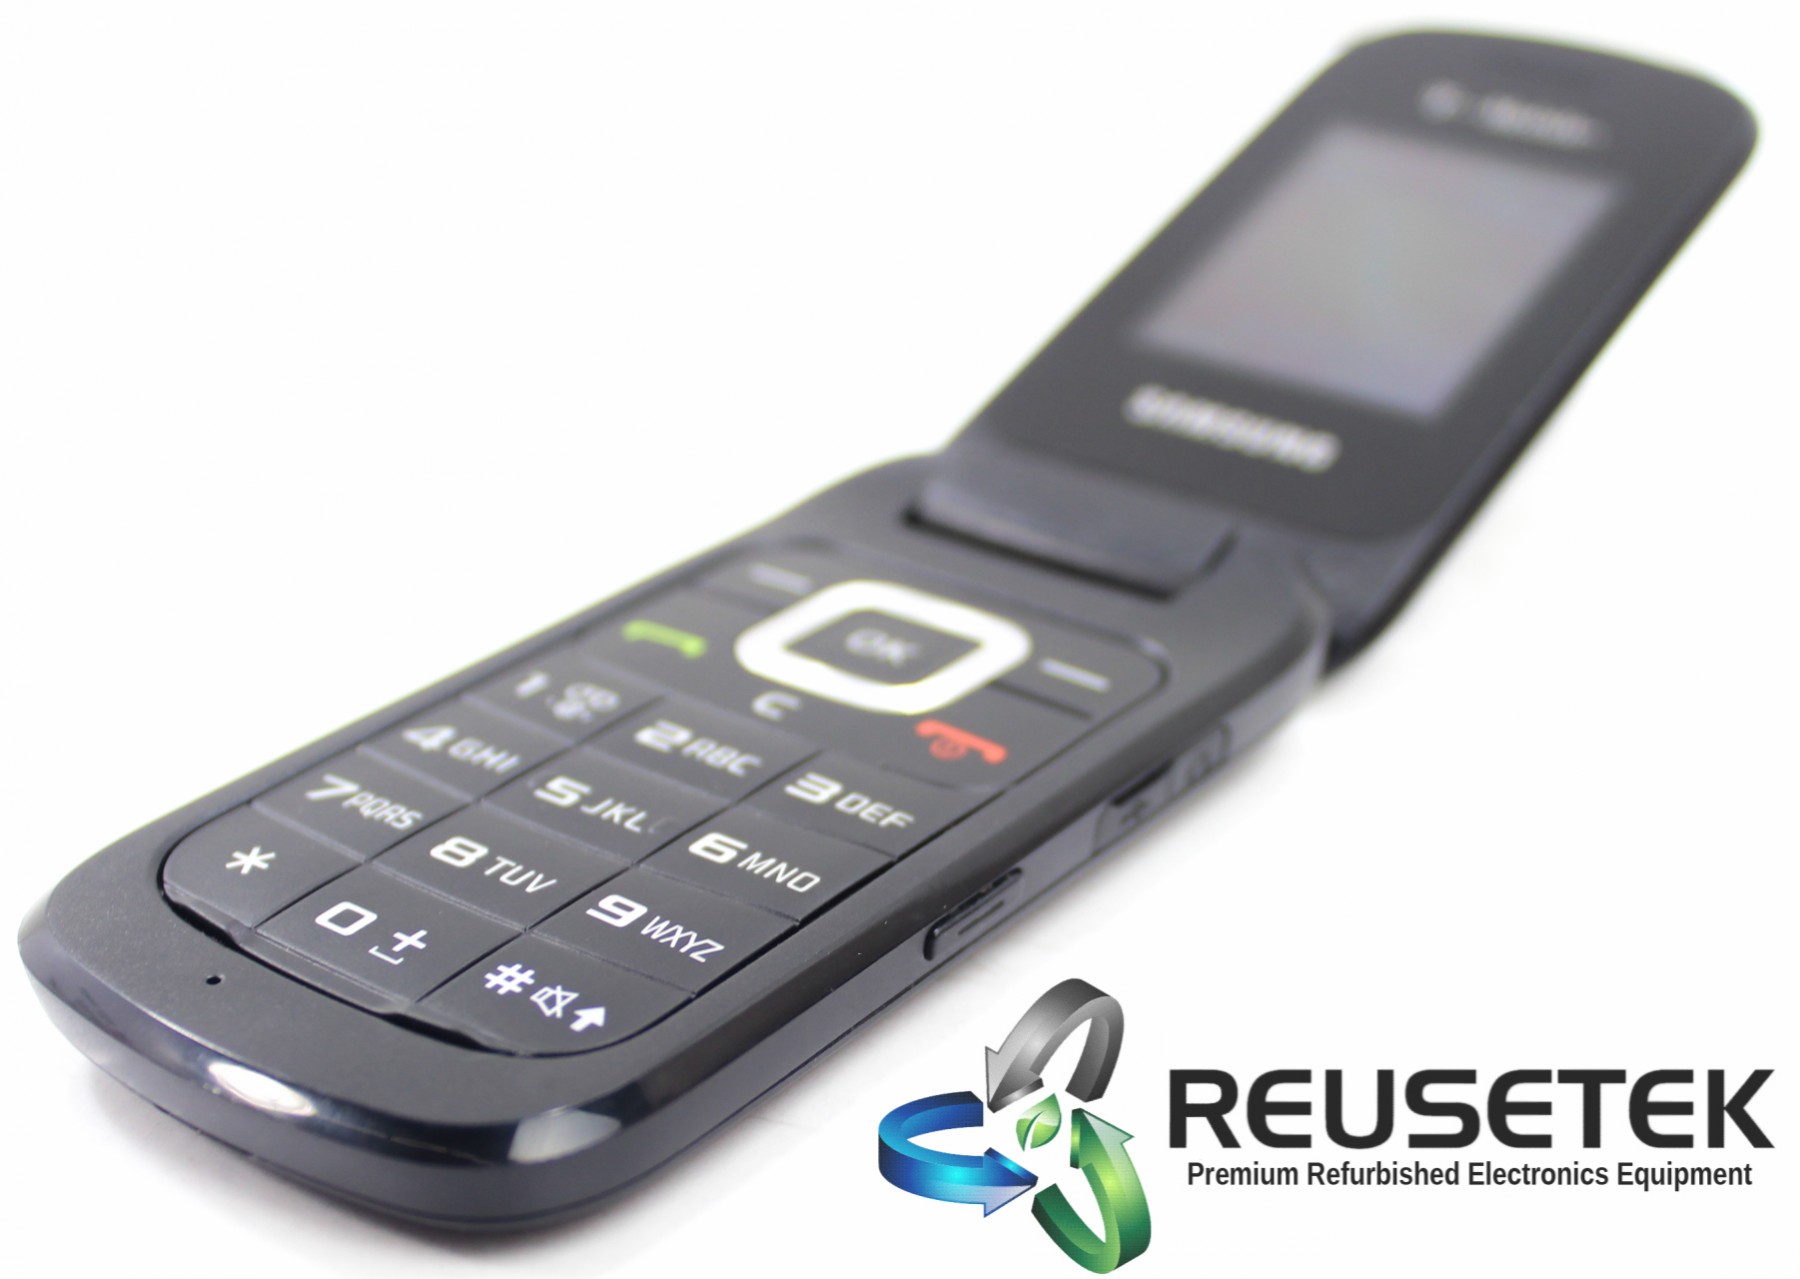 CELL PHONE-Samsung/Tmobile Silver Flip Phone